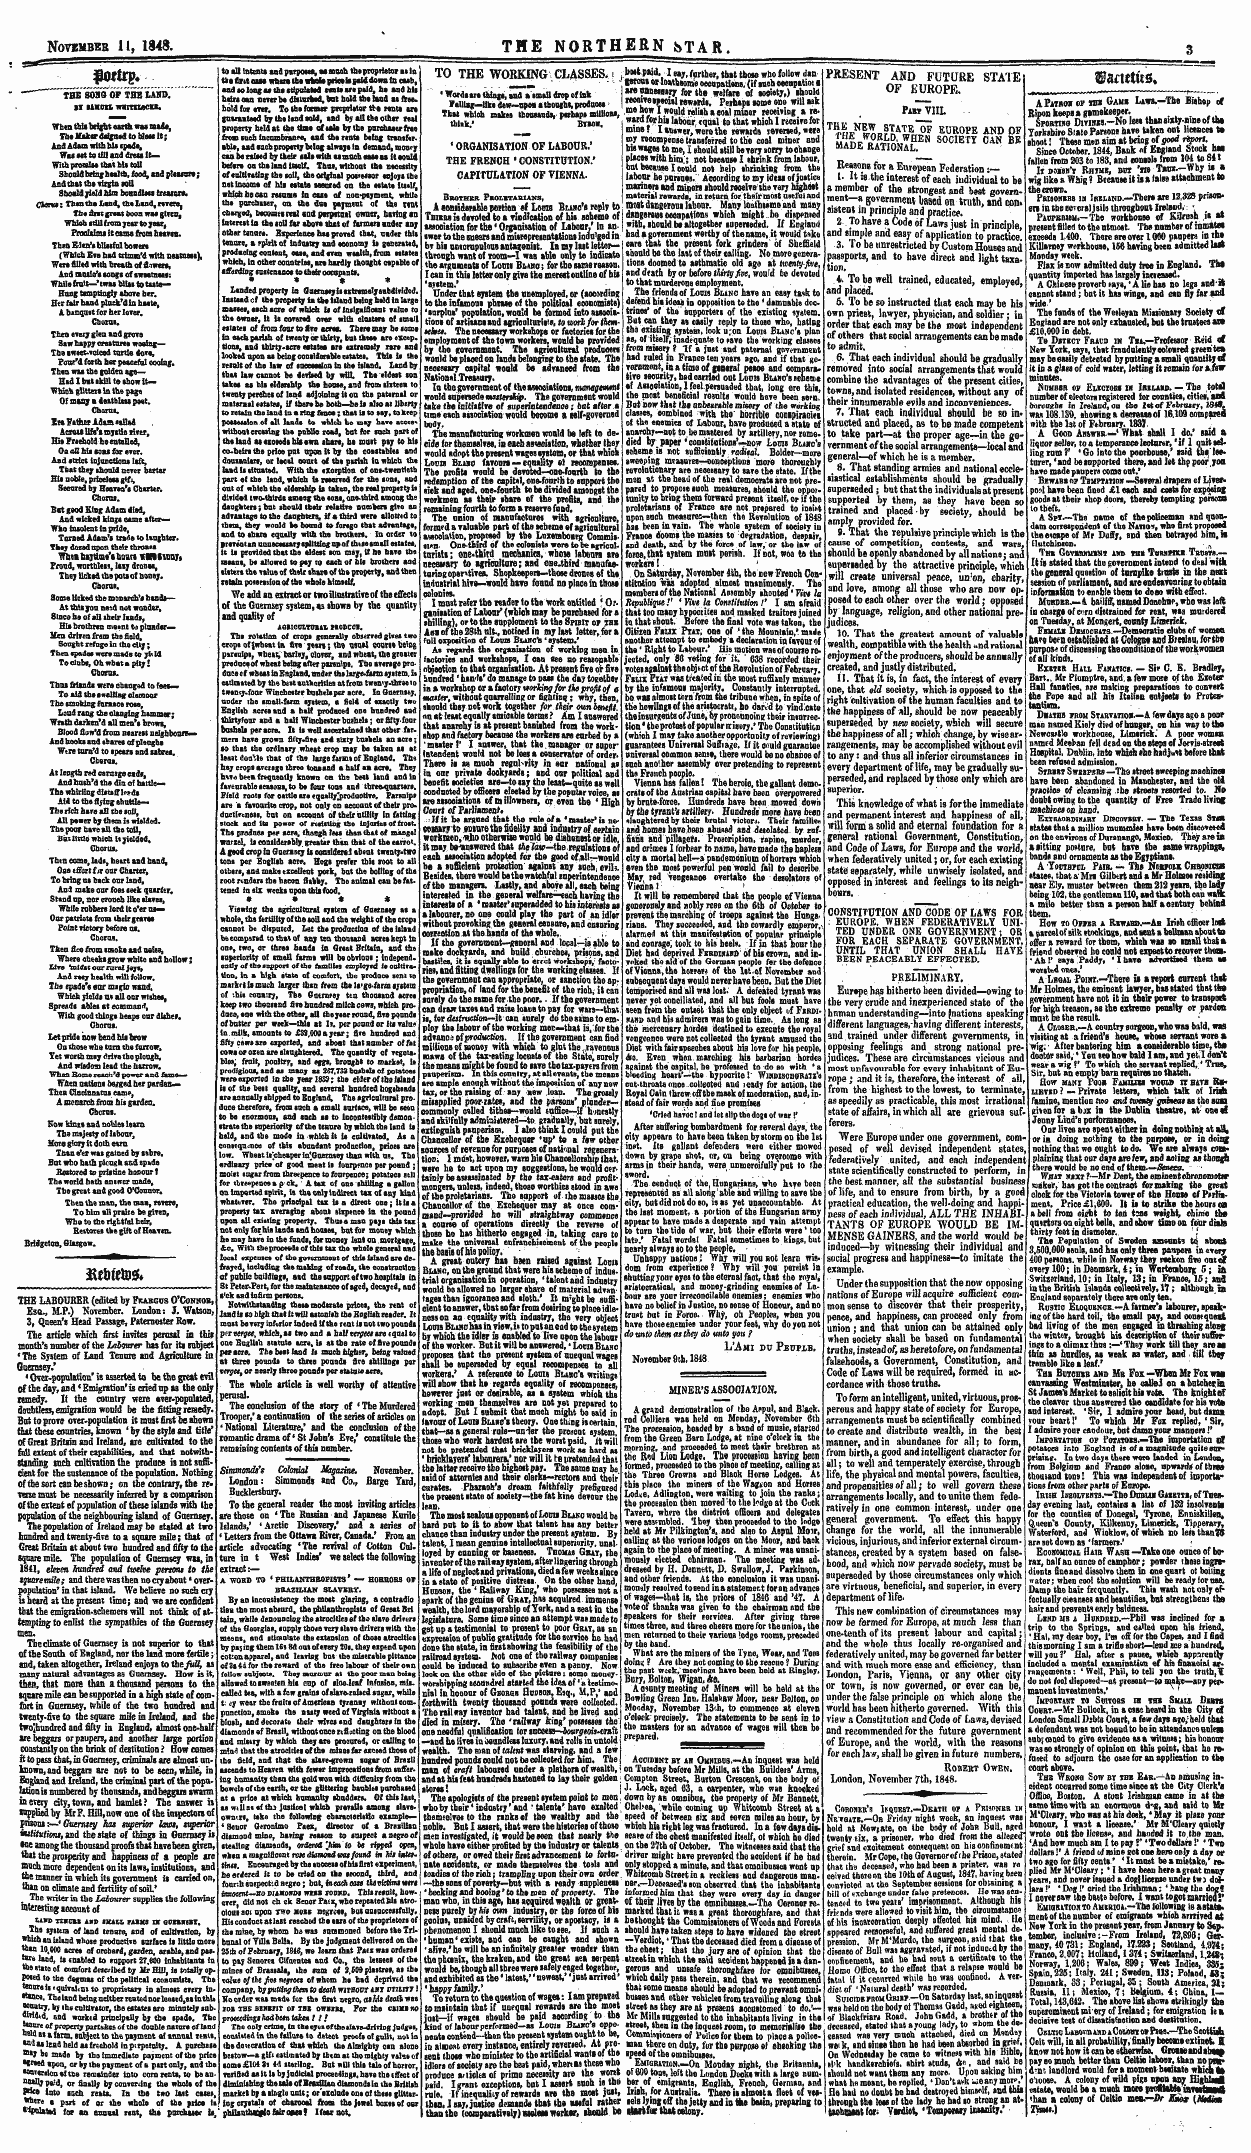 Northern Star (1837-1852): jS F Y, 3rd edition: 3